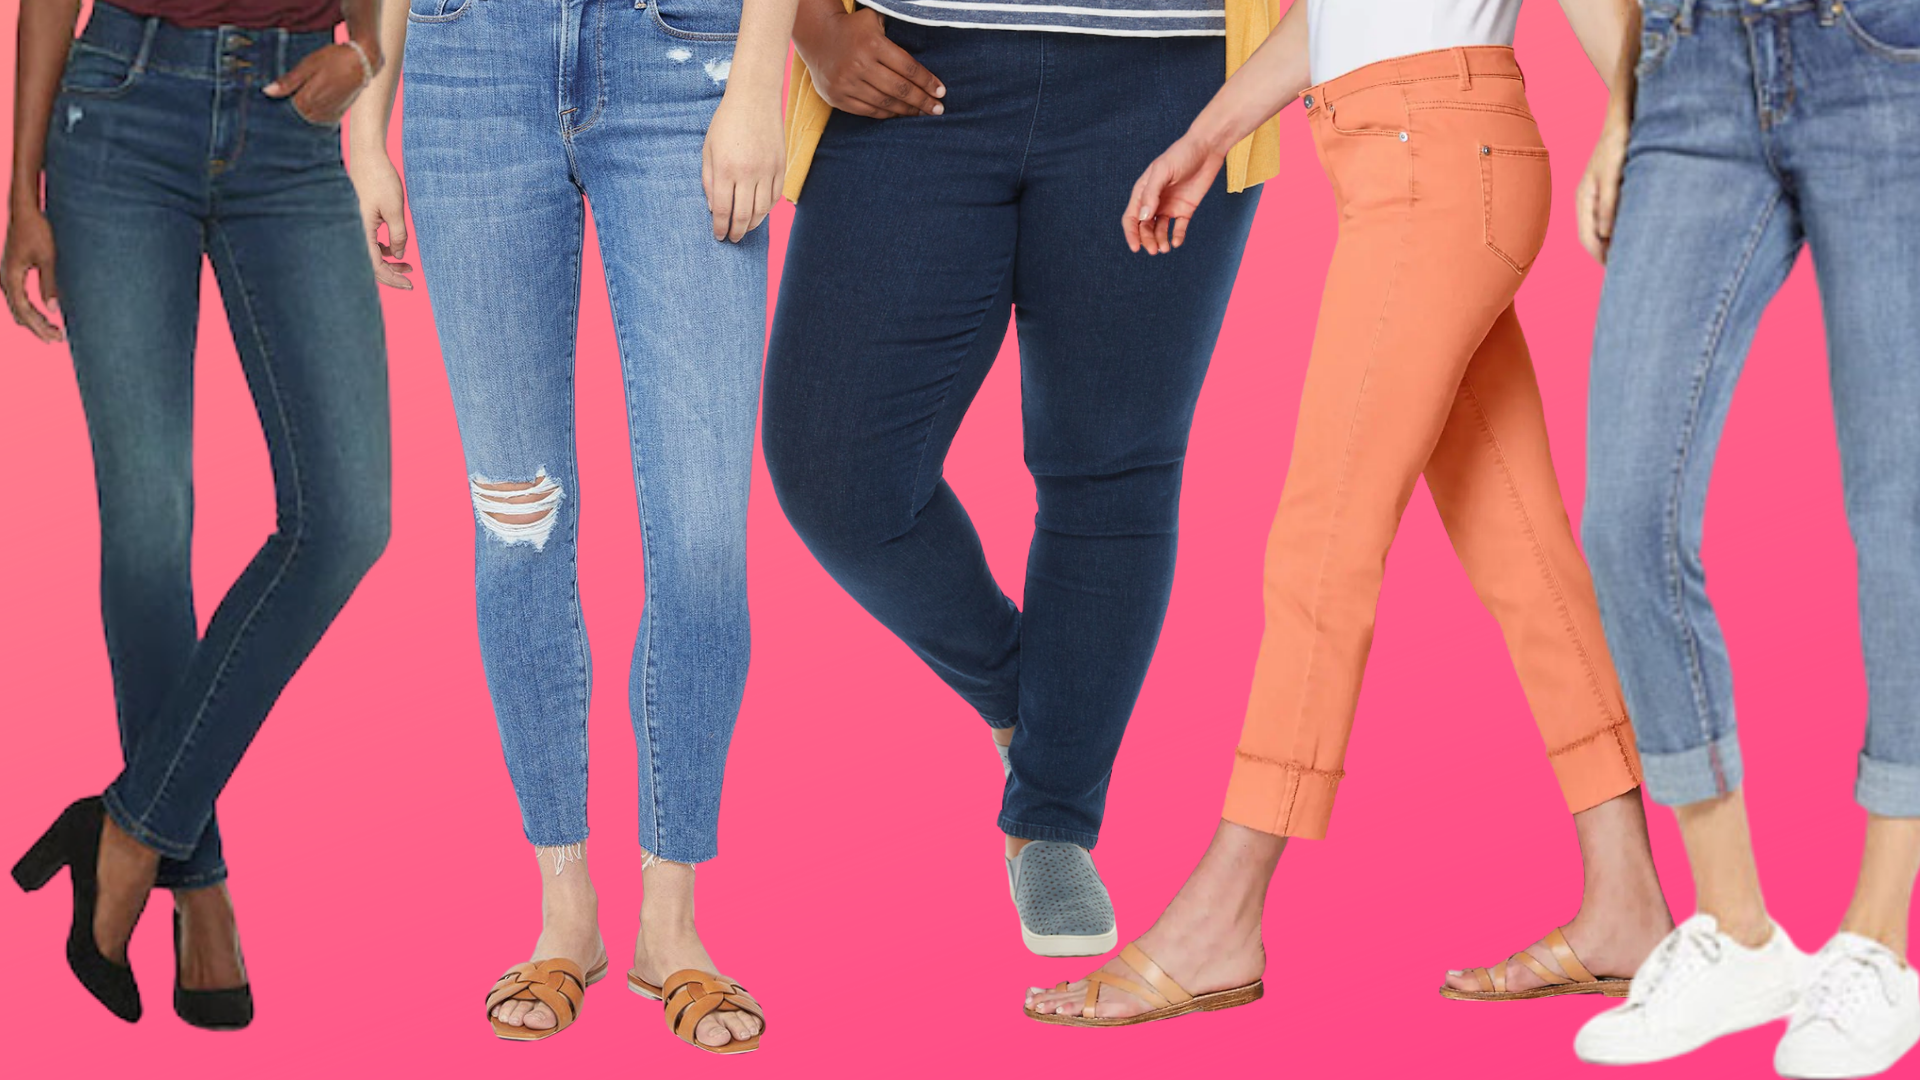 good jeans for women